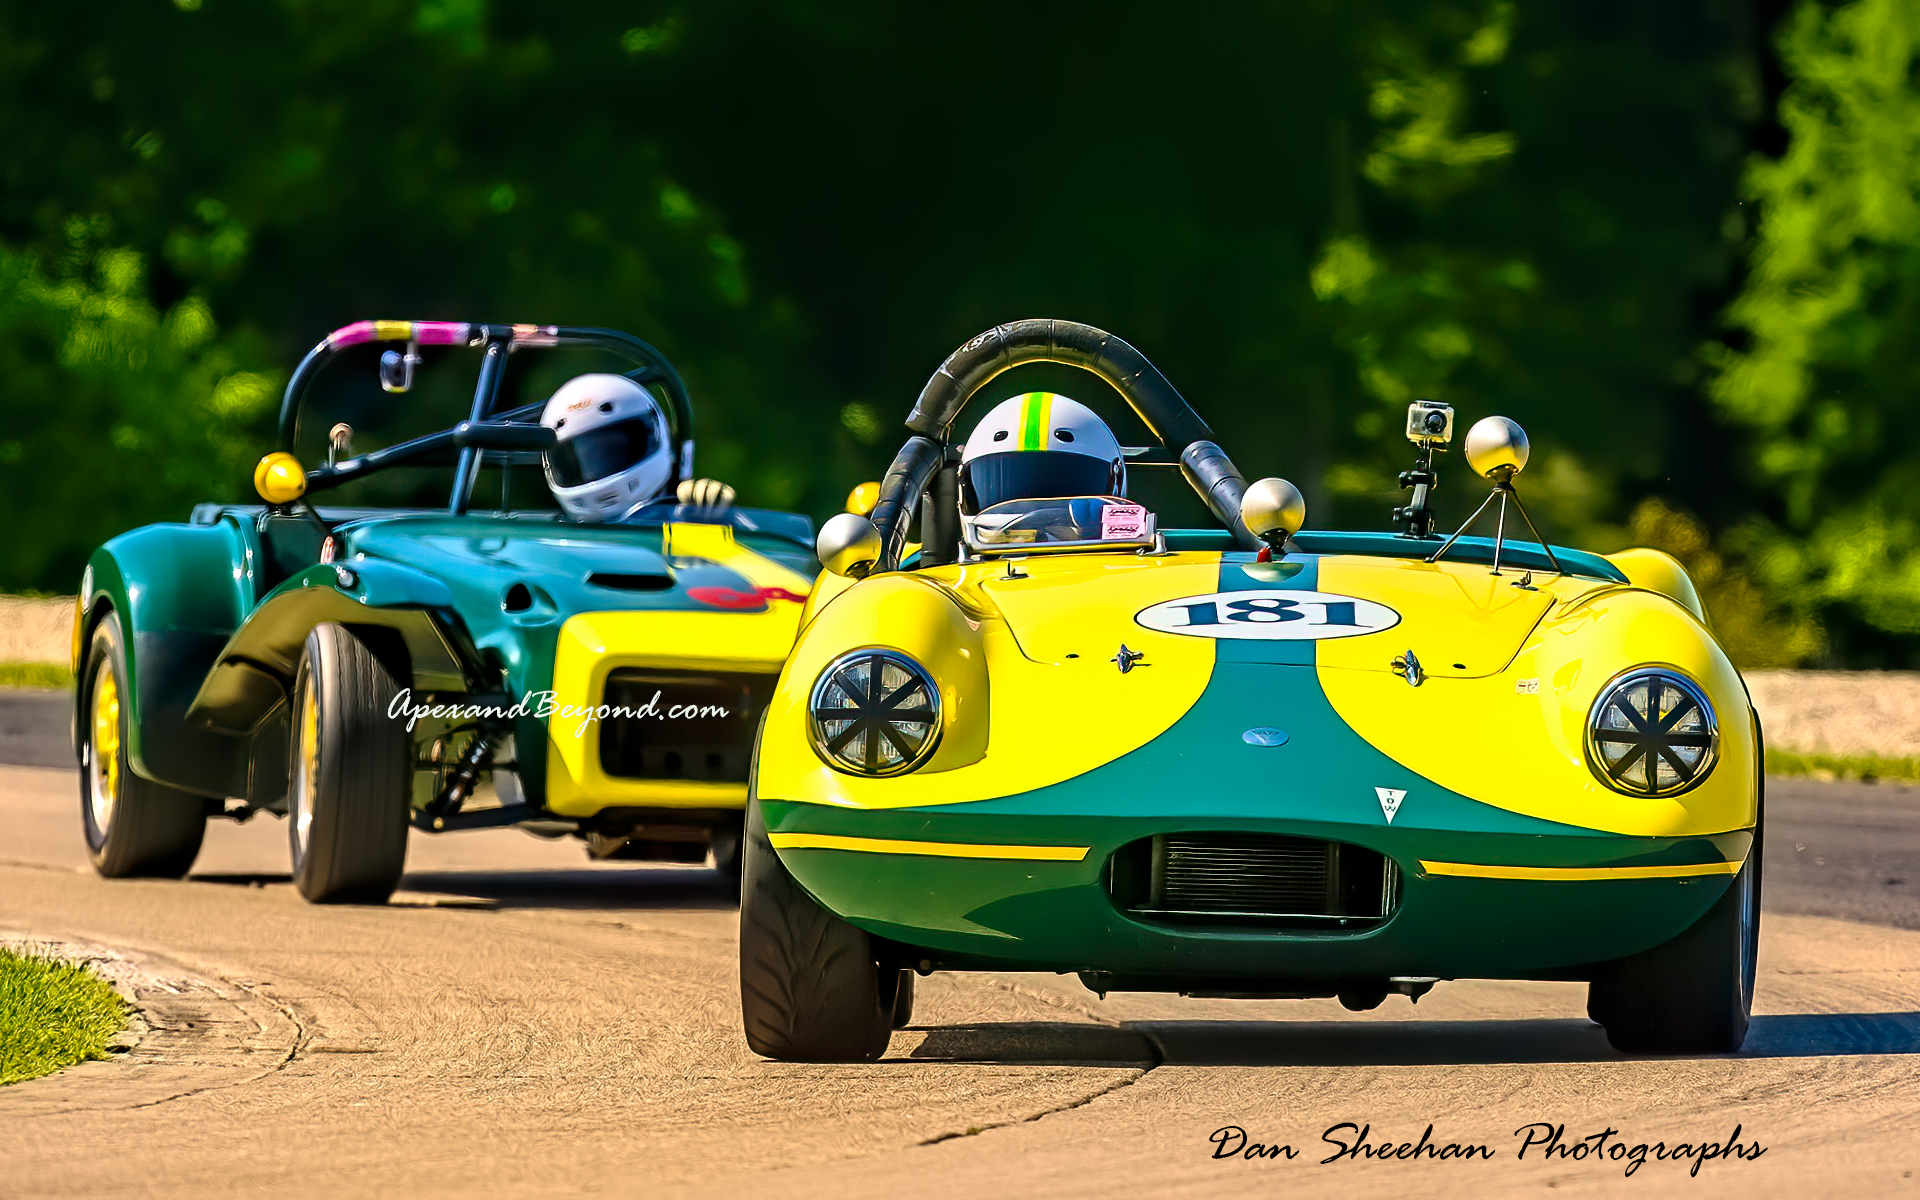 Colorful road racing at Waterford Hills, Michigan : Cars : Dan Sheehan Photographs - Fine Art Stock Photography